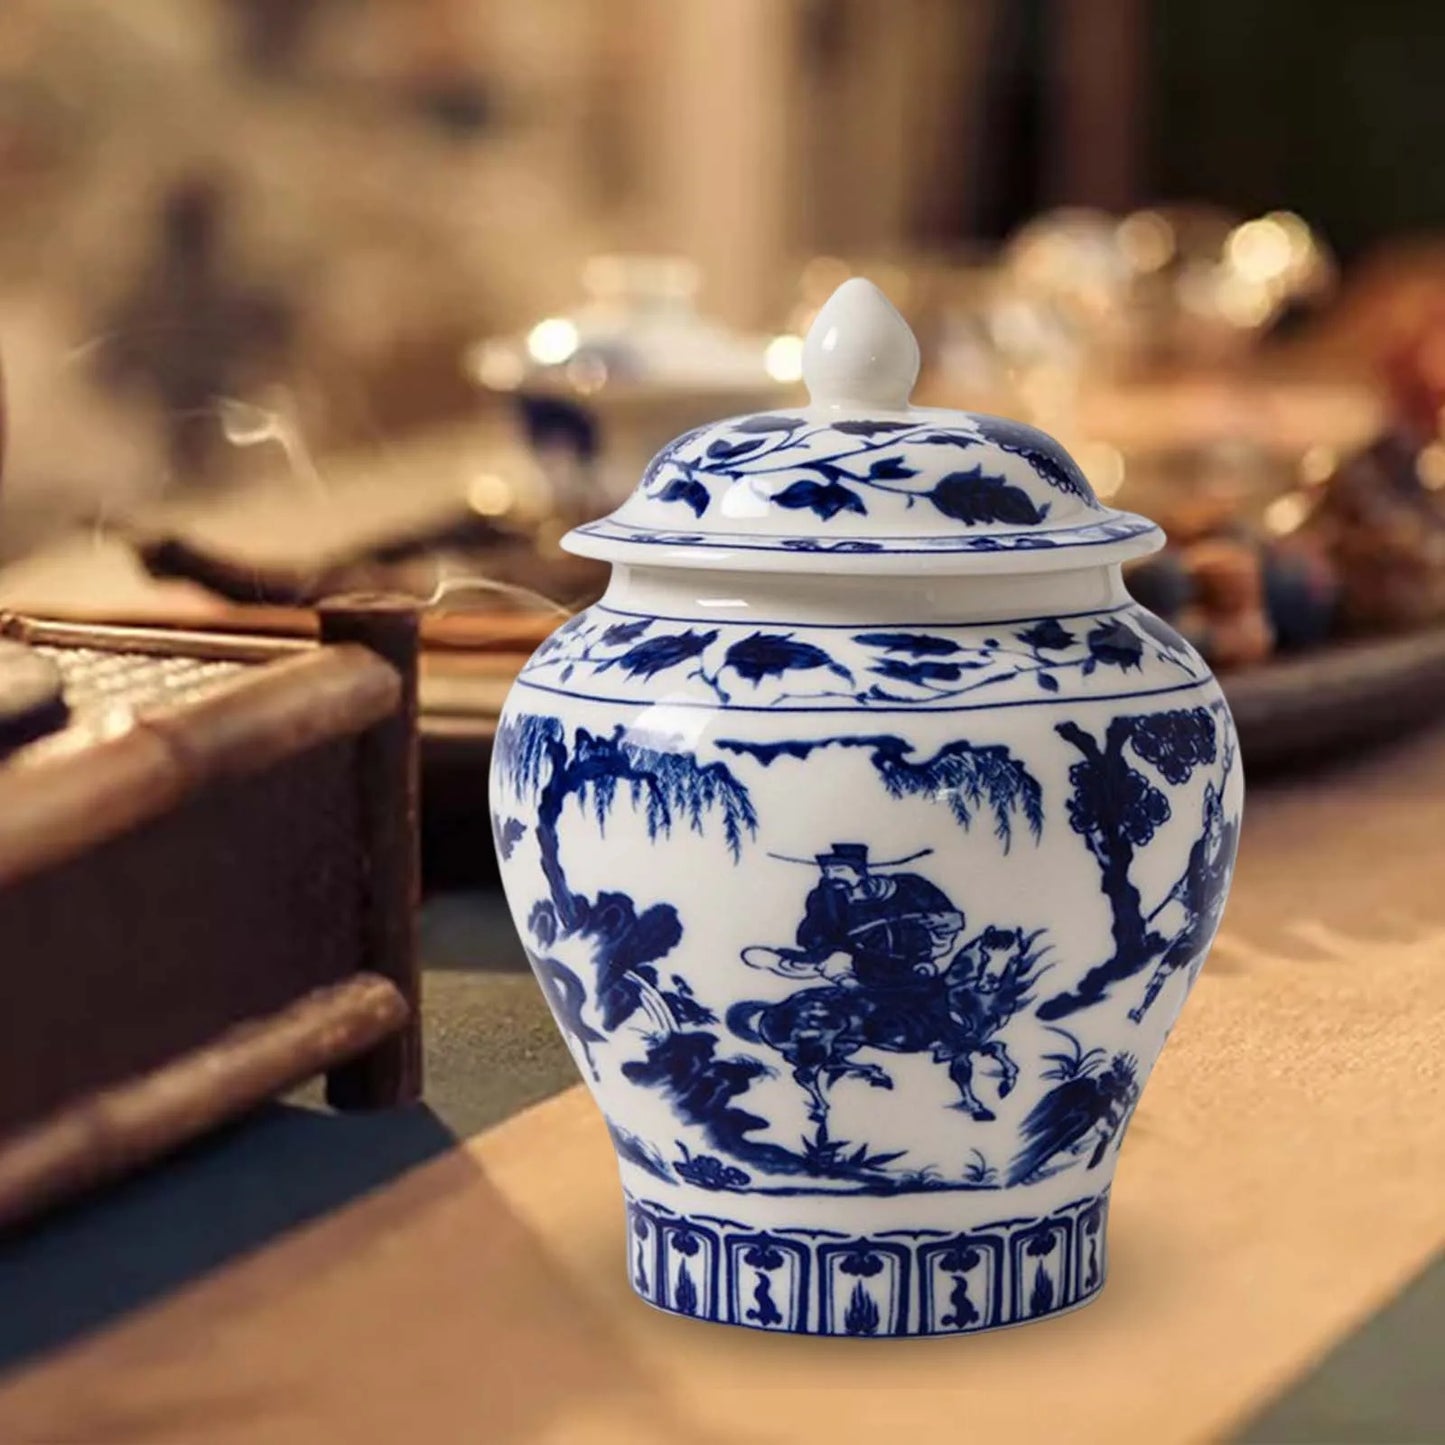 Chinese Ceramic Ginger Jar Decorative Flower Vase with Lid Blue and White Porcelain Jar for Restaurant Decor Ornament